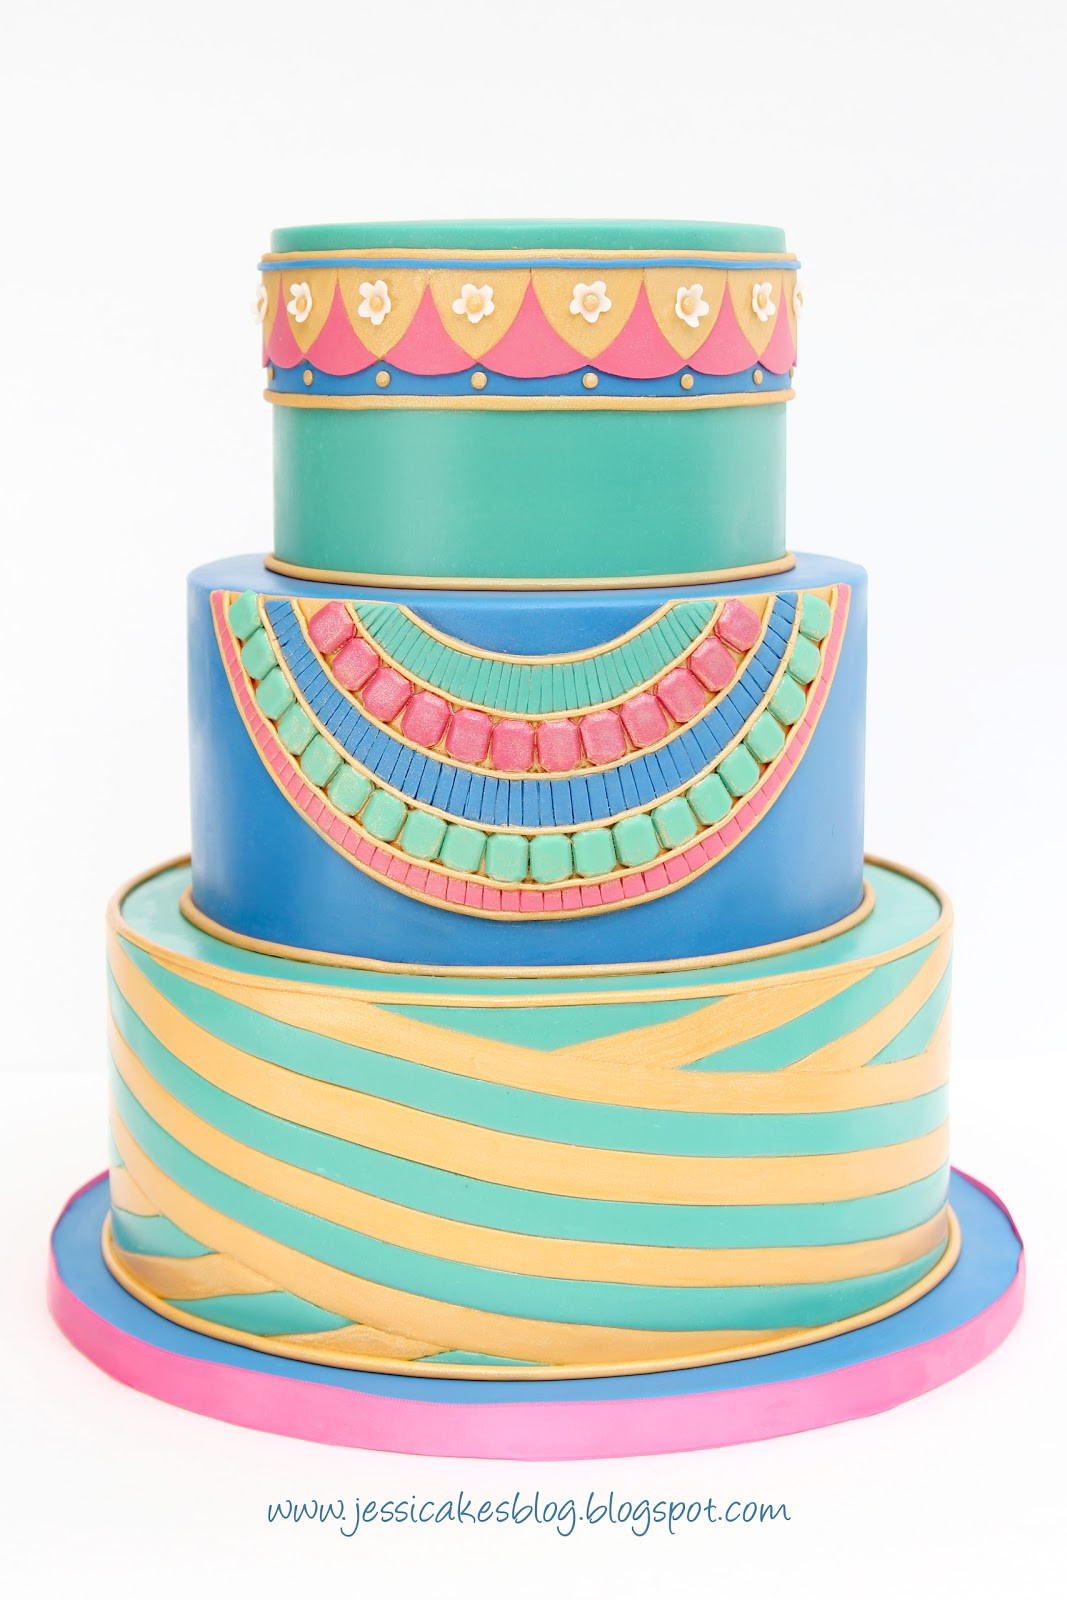 Happy Birthday Jessica Cake
 The Egyptian Cake Jessica Harris Cake Design